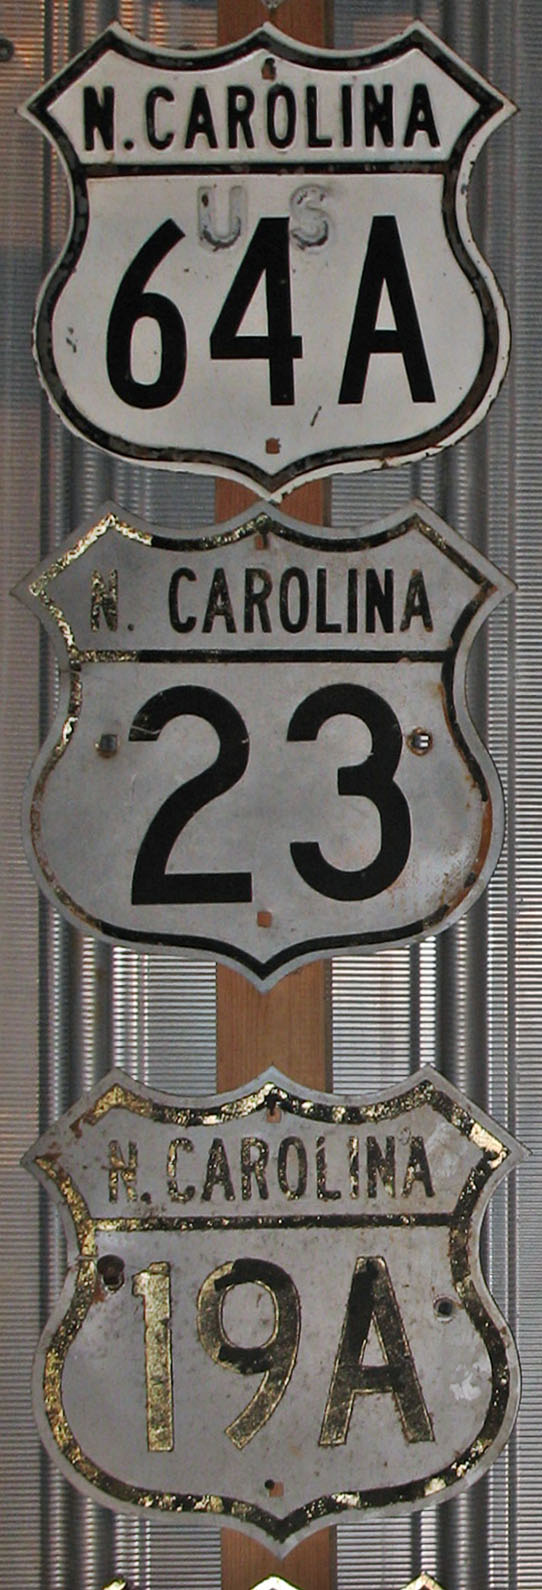 North Carolina - U. S. highway 19A, U.S. Highway 23, and U. S. highway 64A sign.